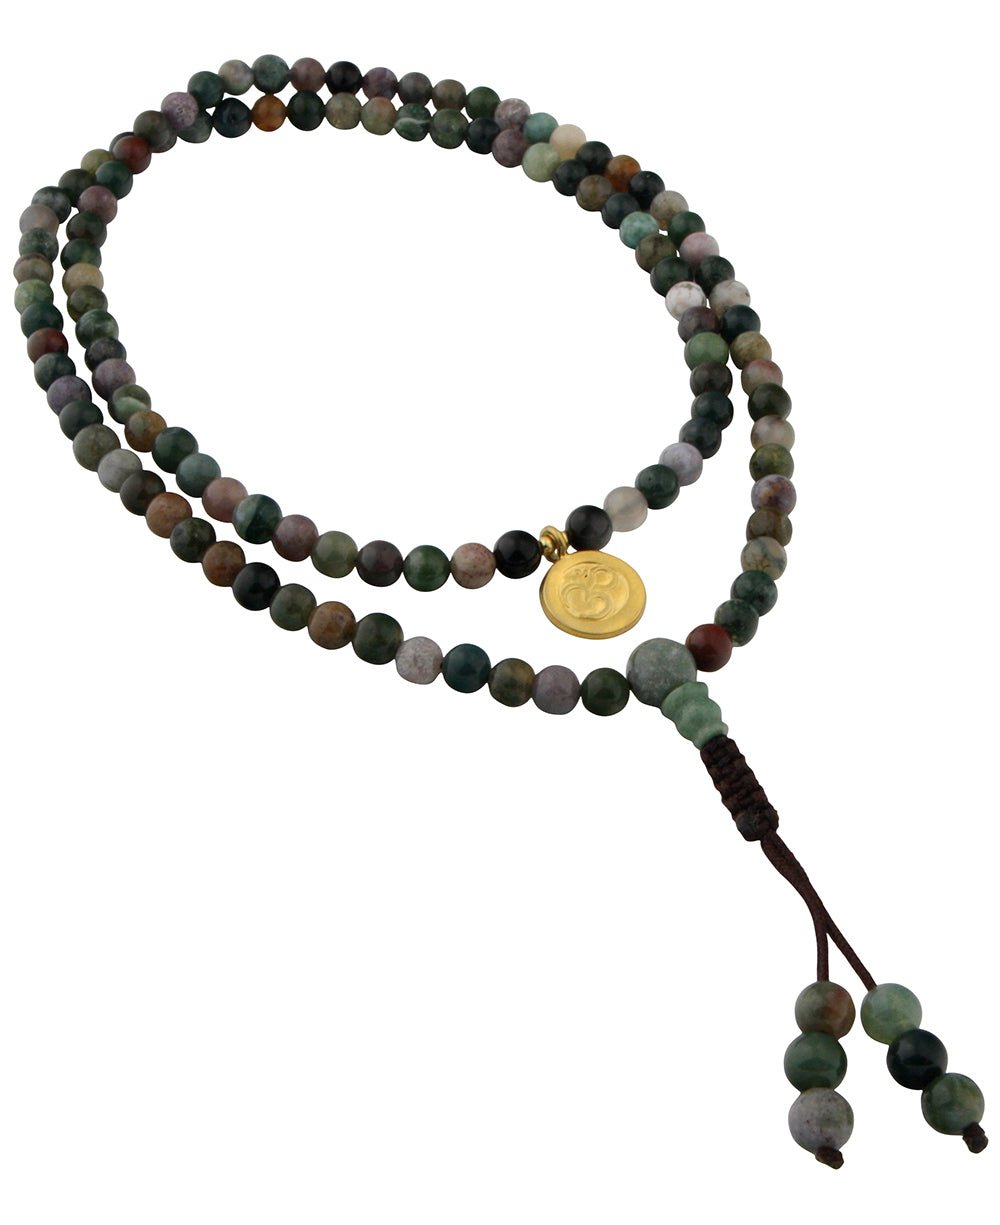 Japer Meditation Mala with Gold Plated Om Charm - Prayer Beads